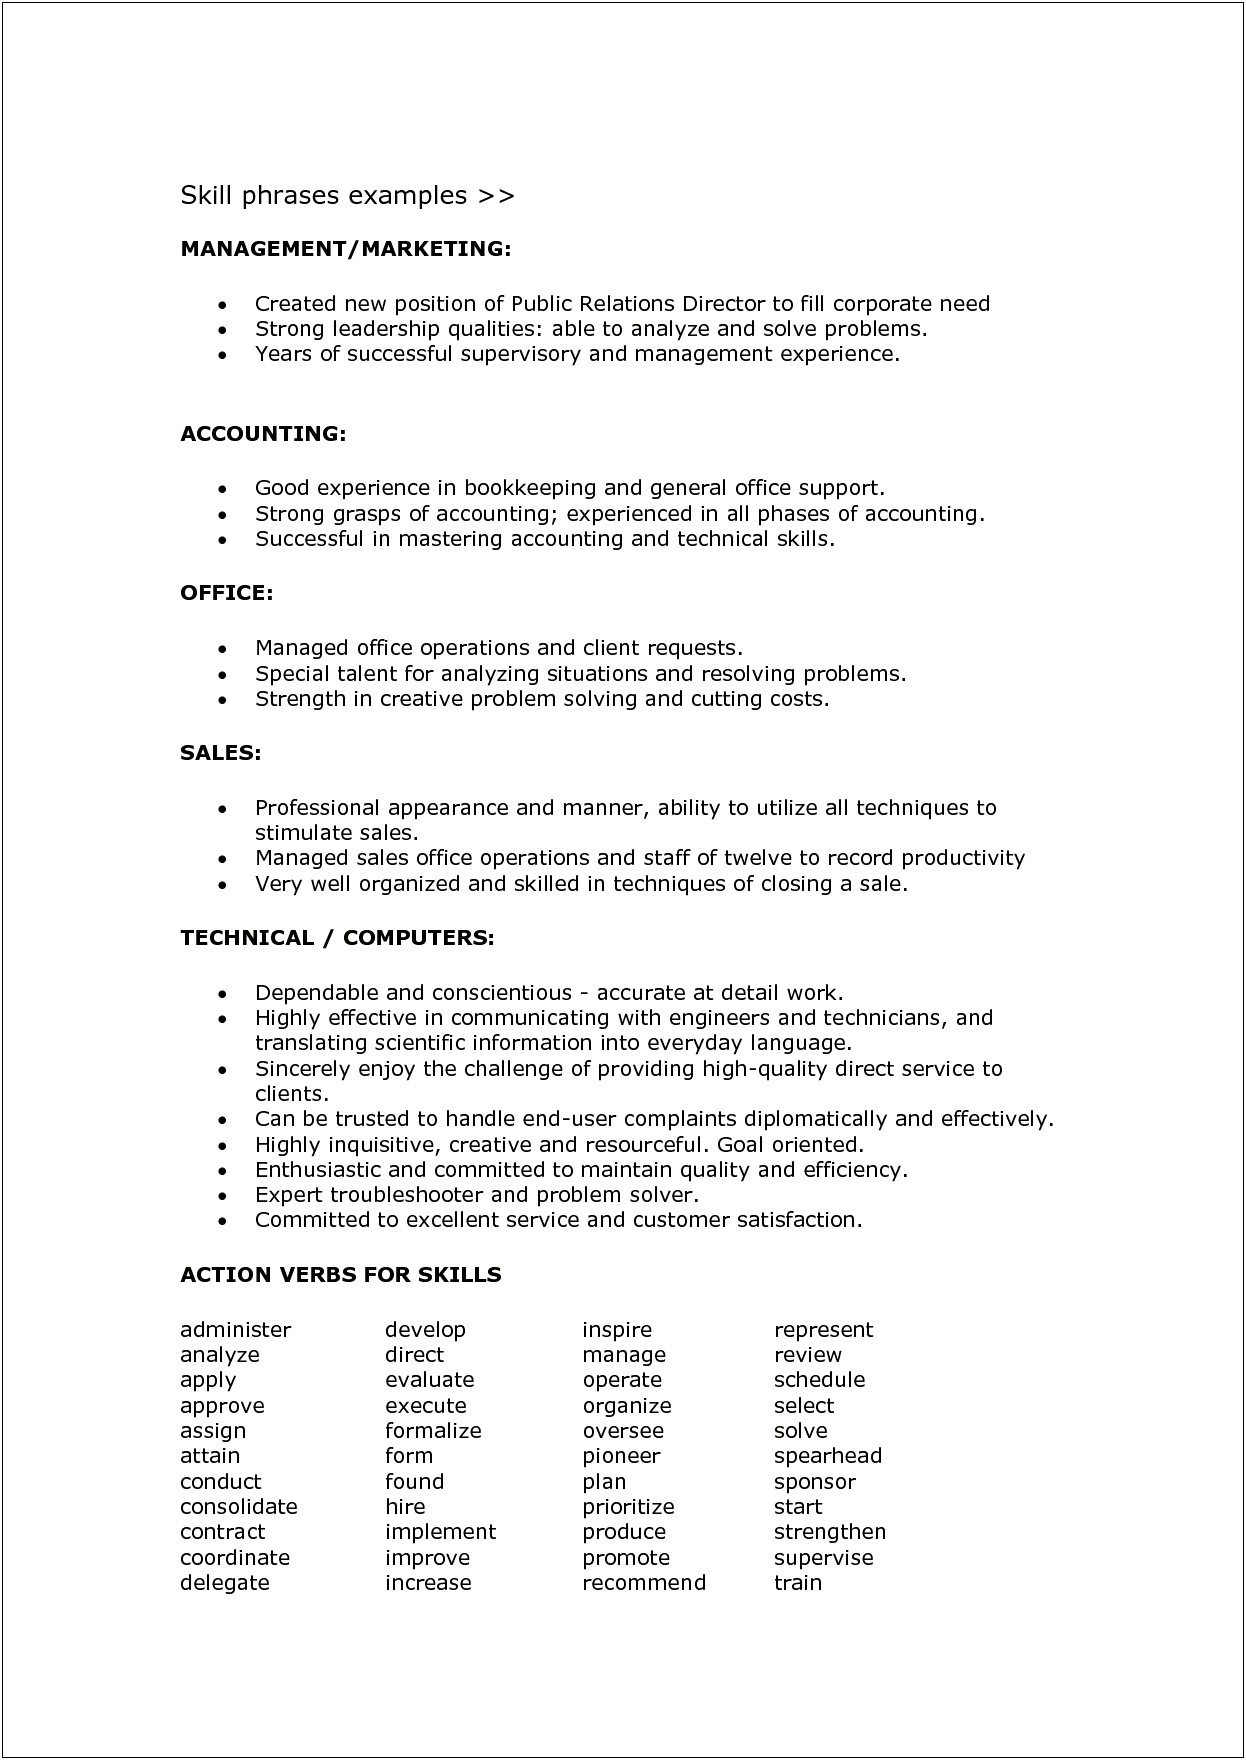 Sample Resume That List Of Technical Skills